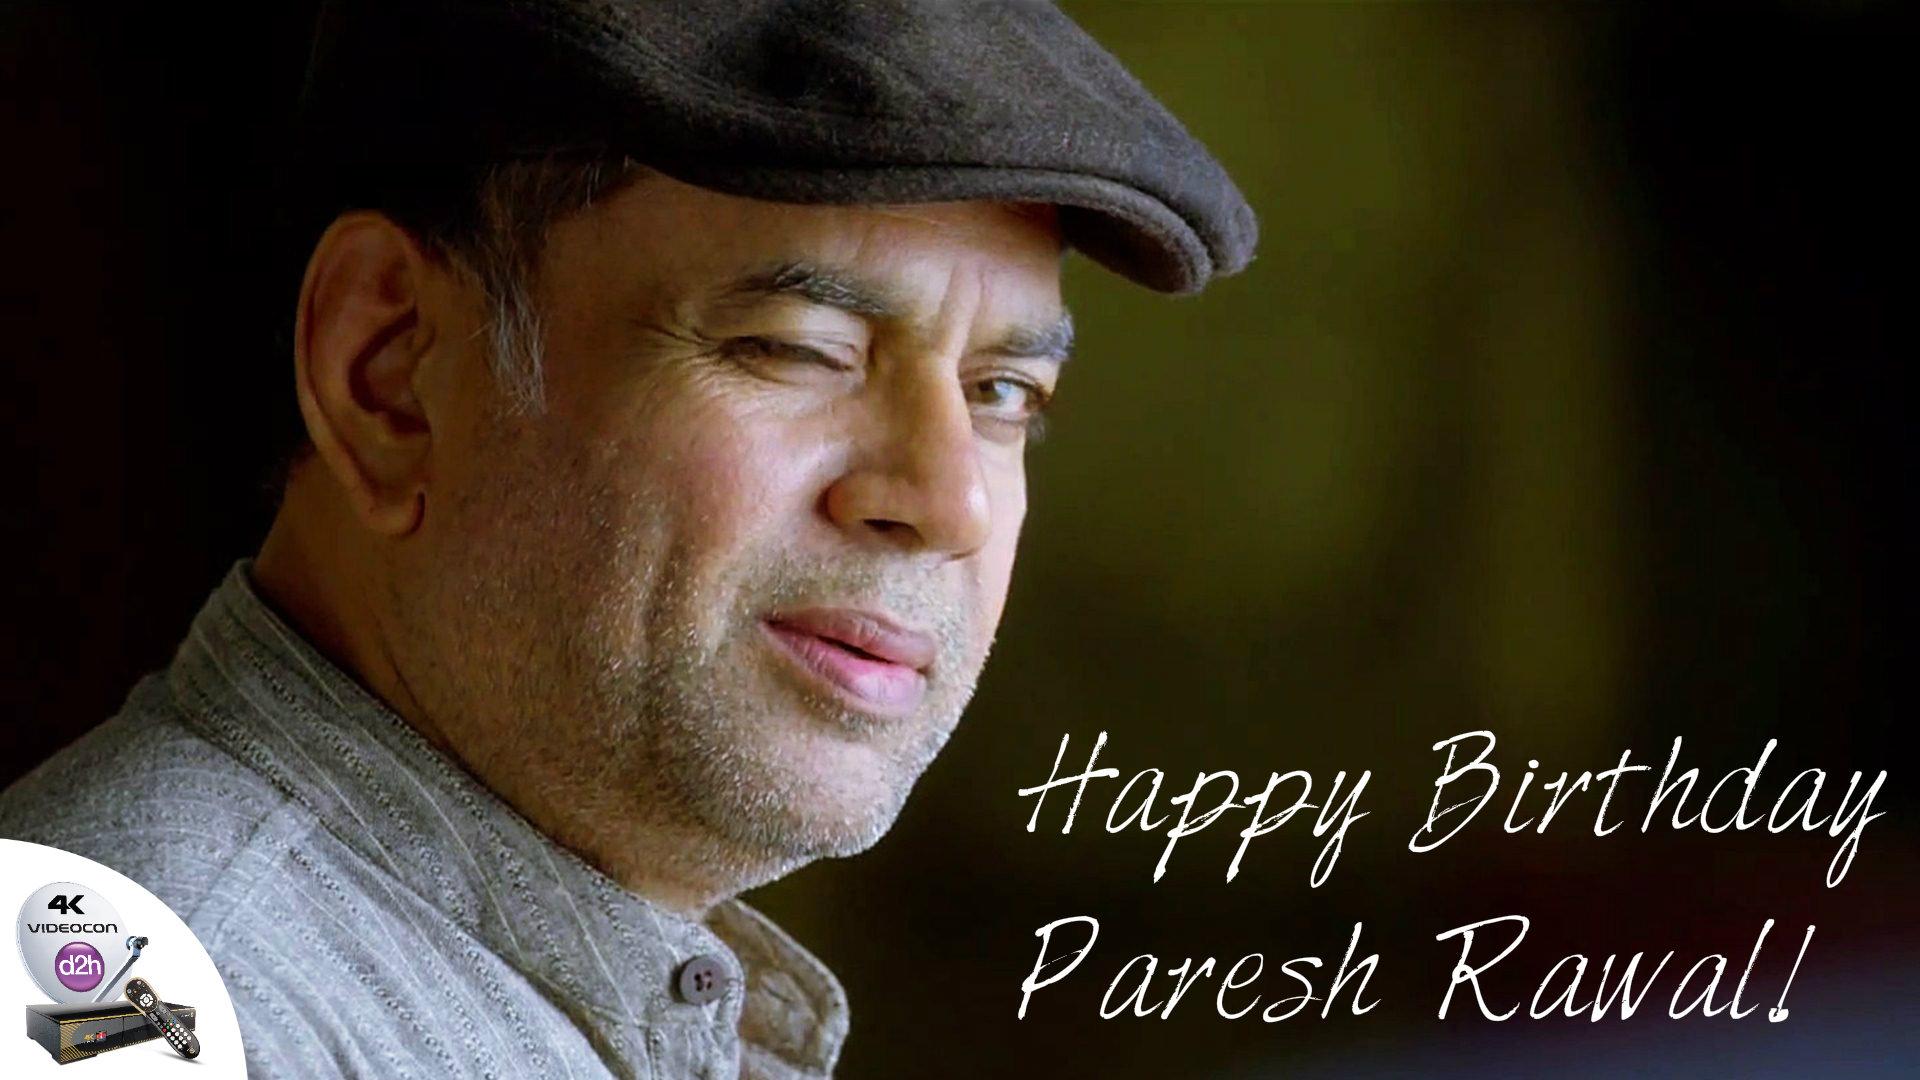 Happy Birthday Paresh Rawal!
Join us in wishing the Comedy Guru a brilliant year. 